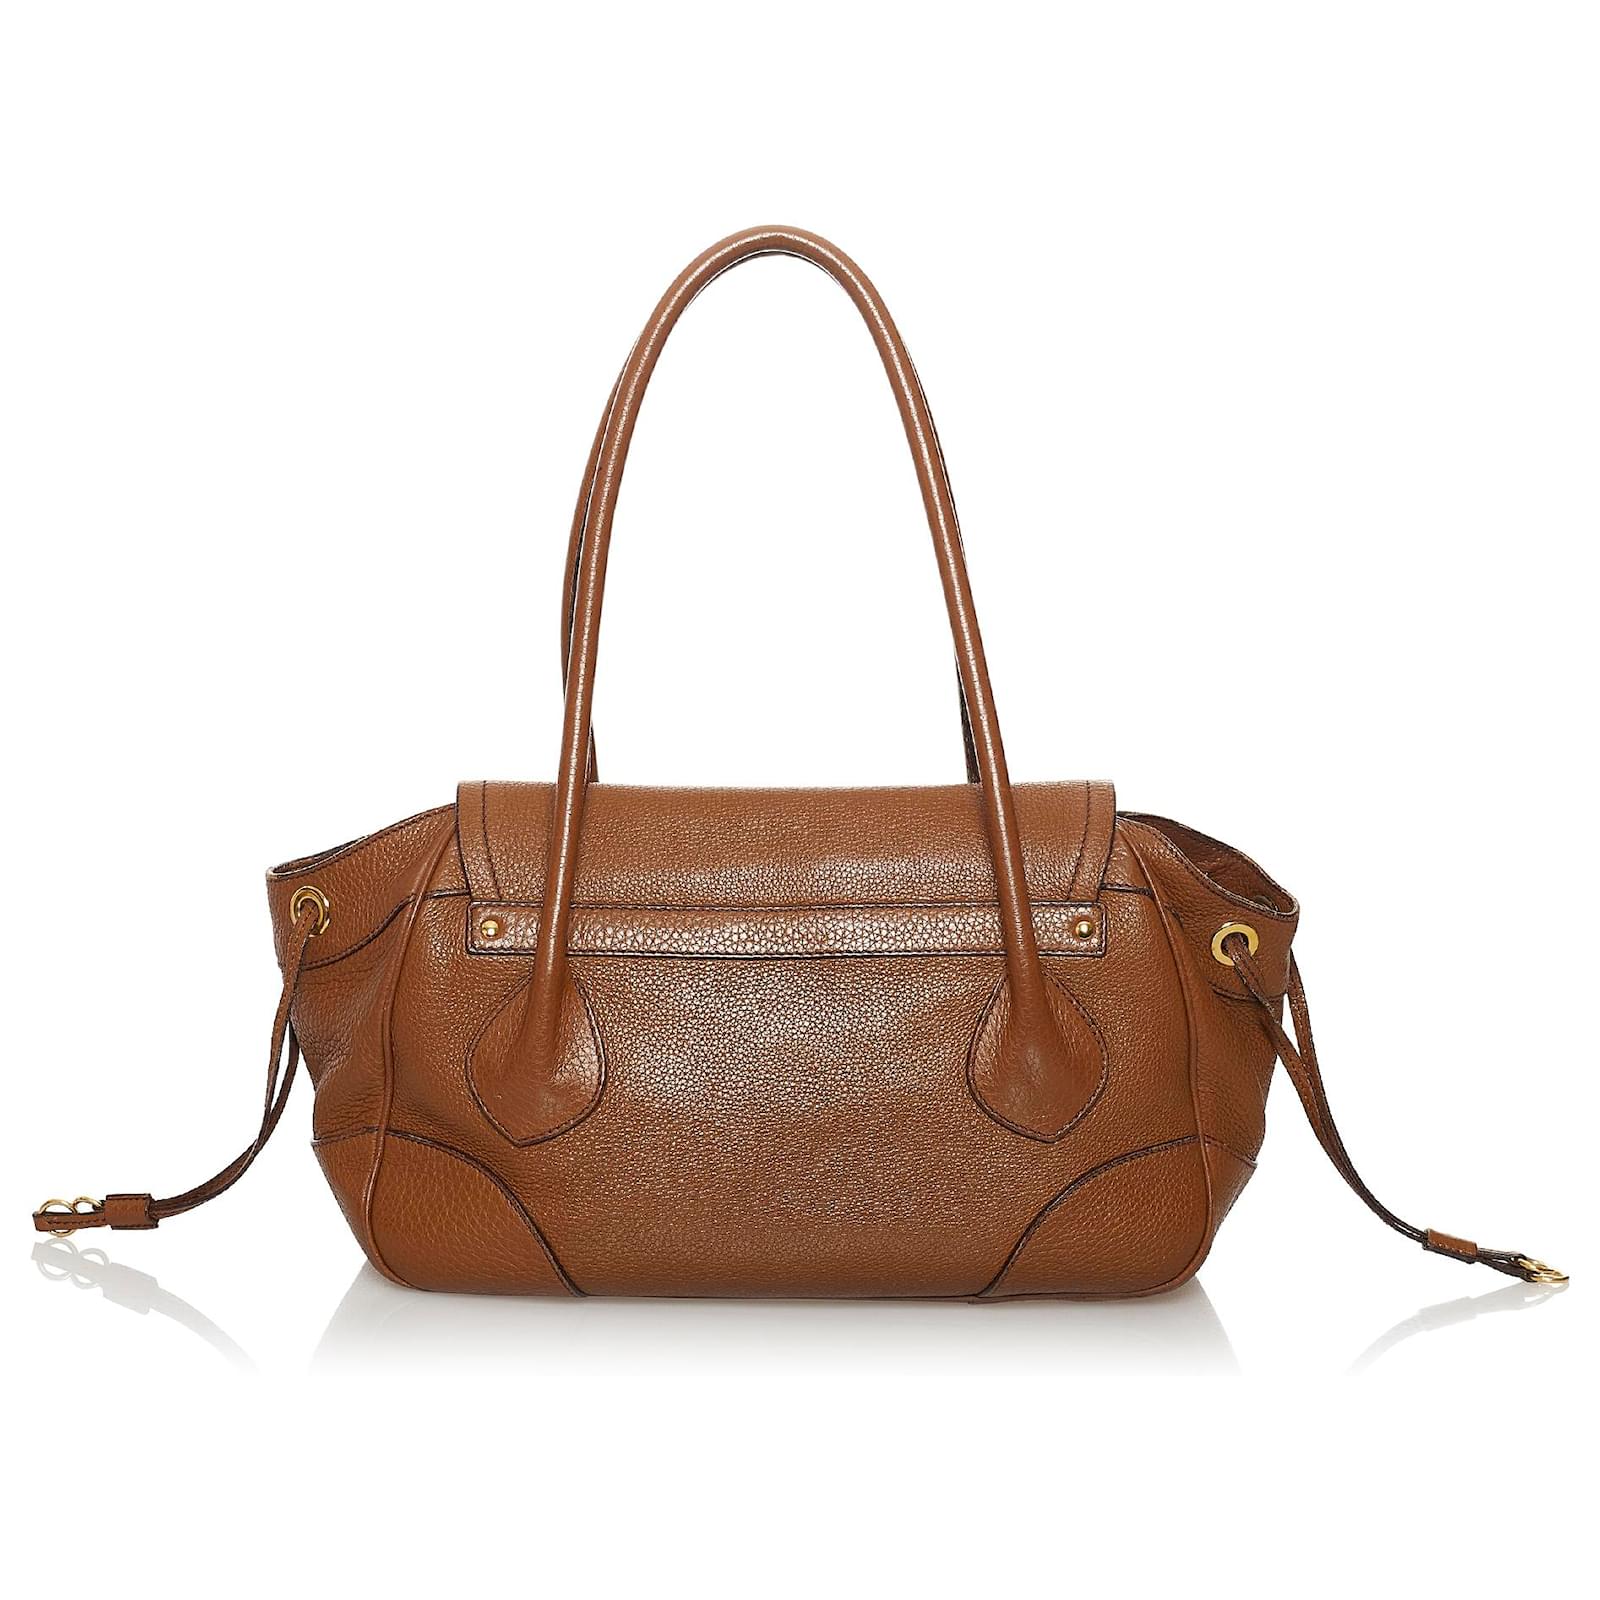 Prada Leather Pattina Pushlock Sound Lock Shoulder Purse Bag Brown Tan Gold